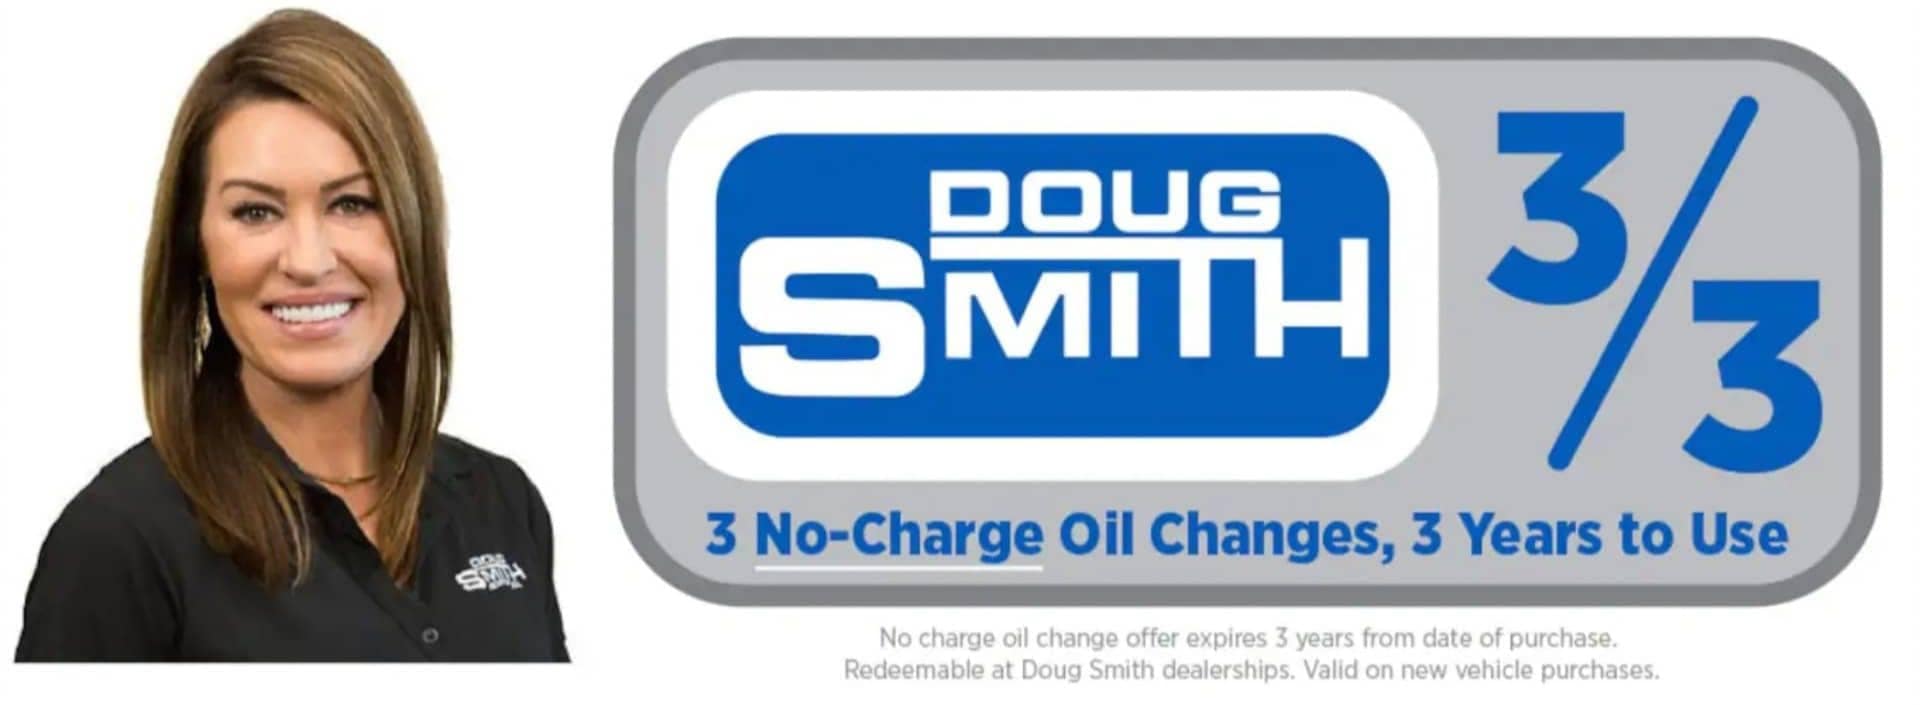 Doug Smith